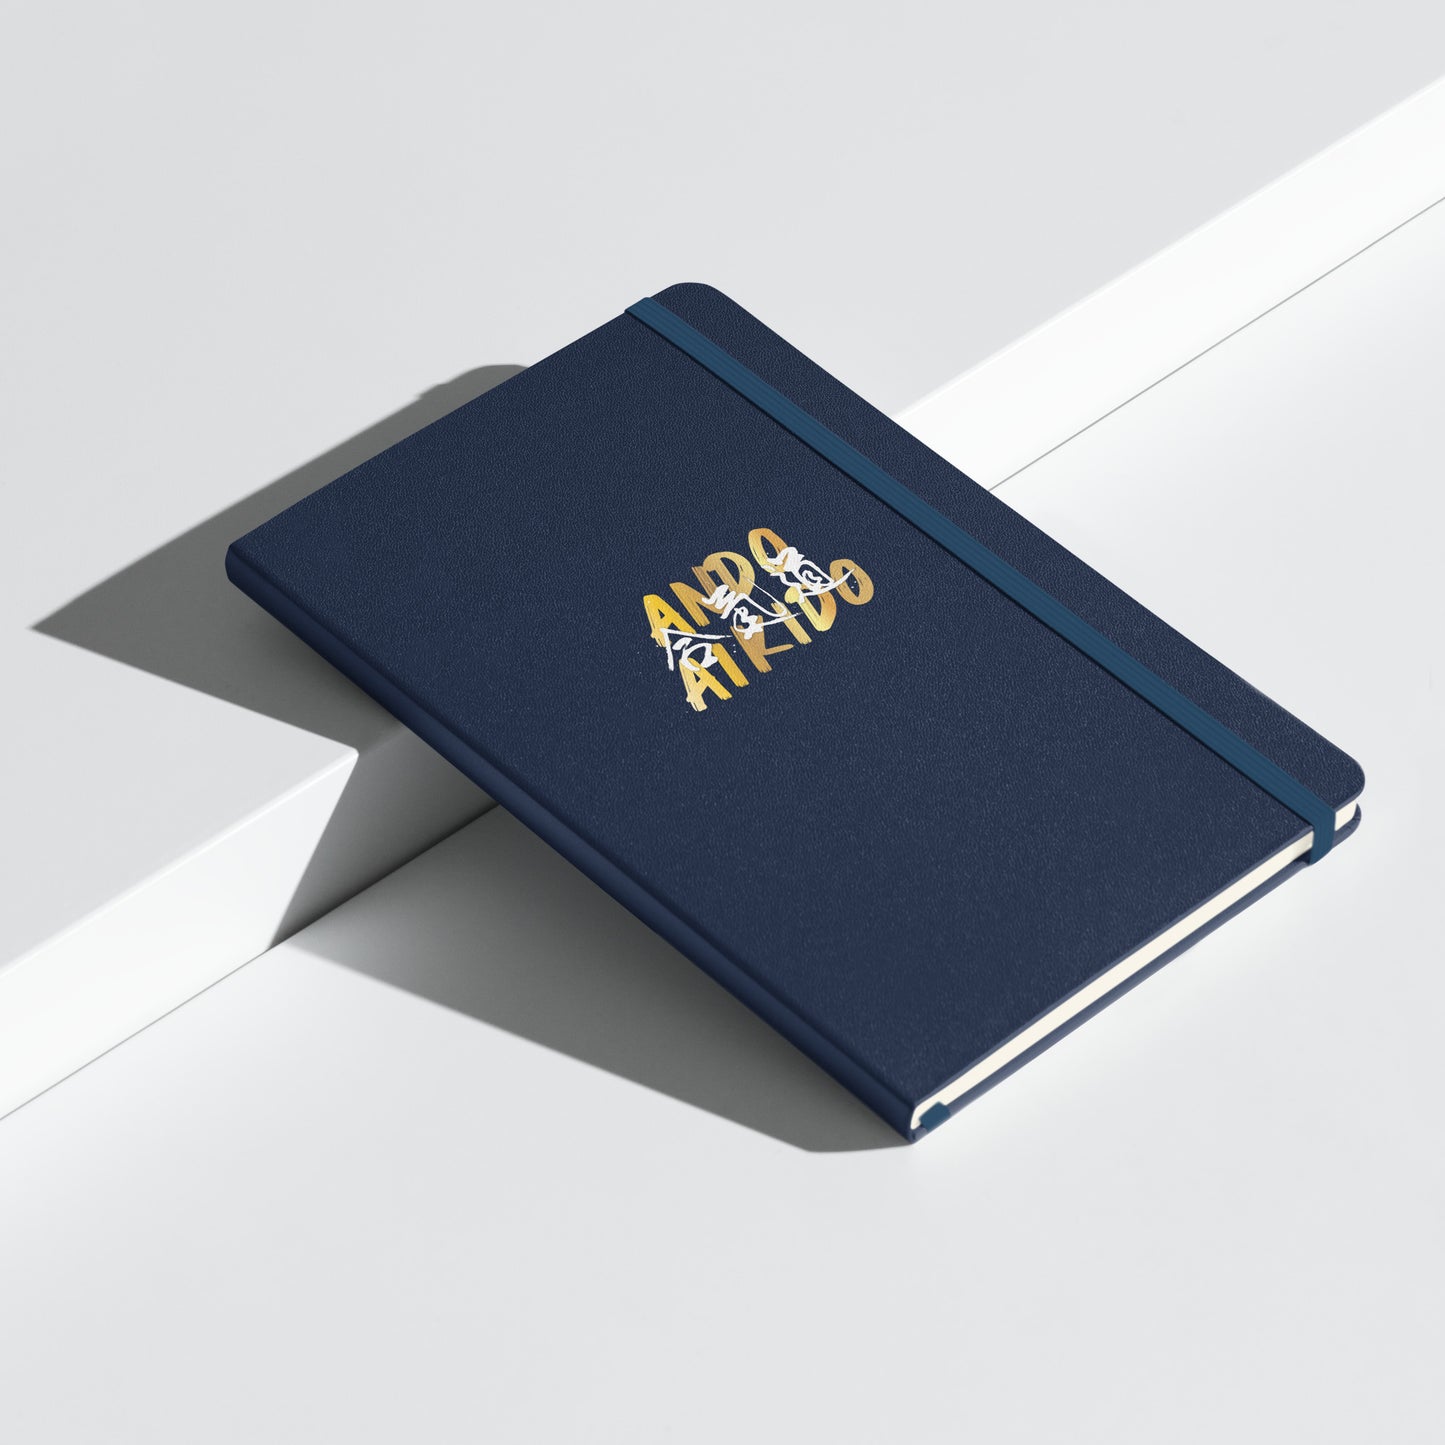 Hardcover Aikido notebook